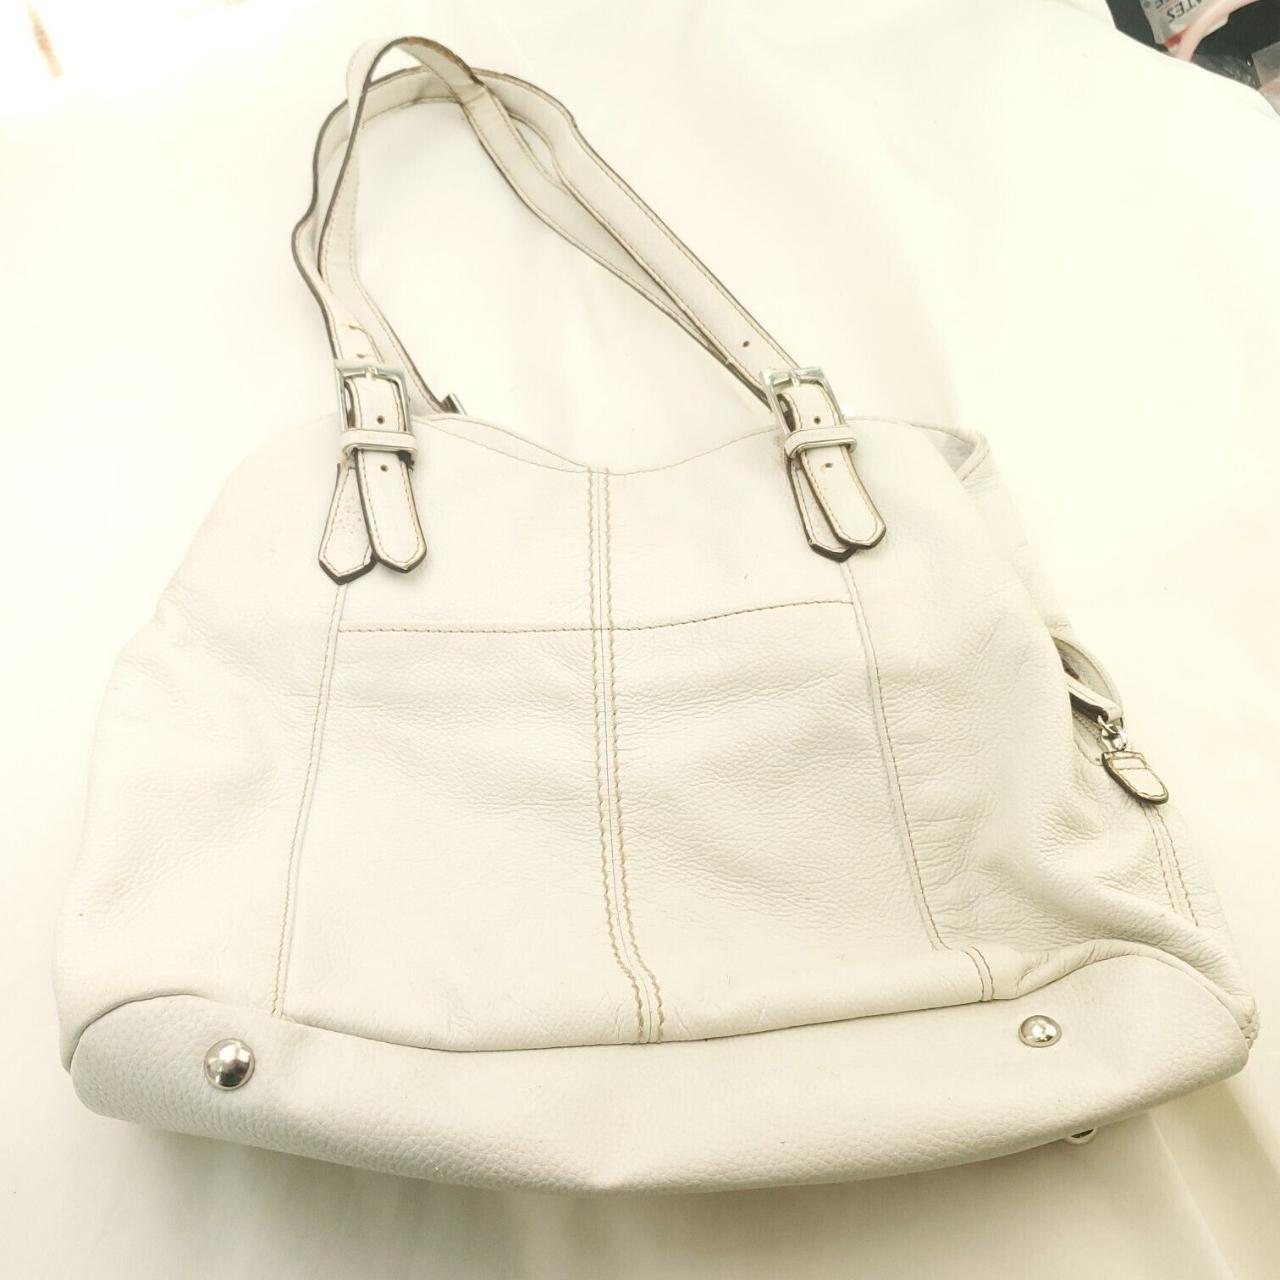 Tignanello White Leather Shoulder Bag/2 Front Back Large Compartments White  Leather Shoulder Bag/functional Large Leather Shoulder Bag - Etsy